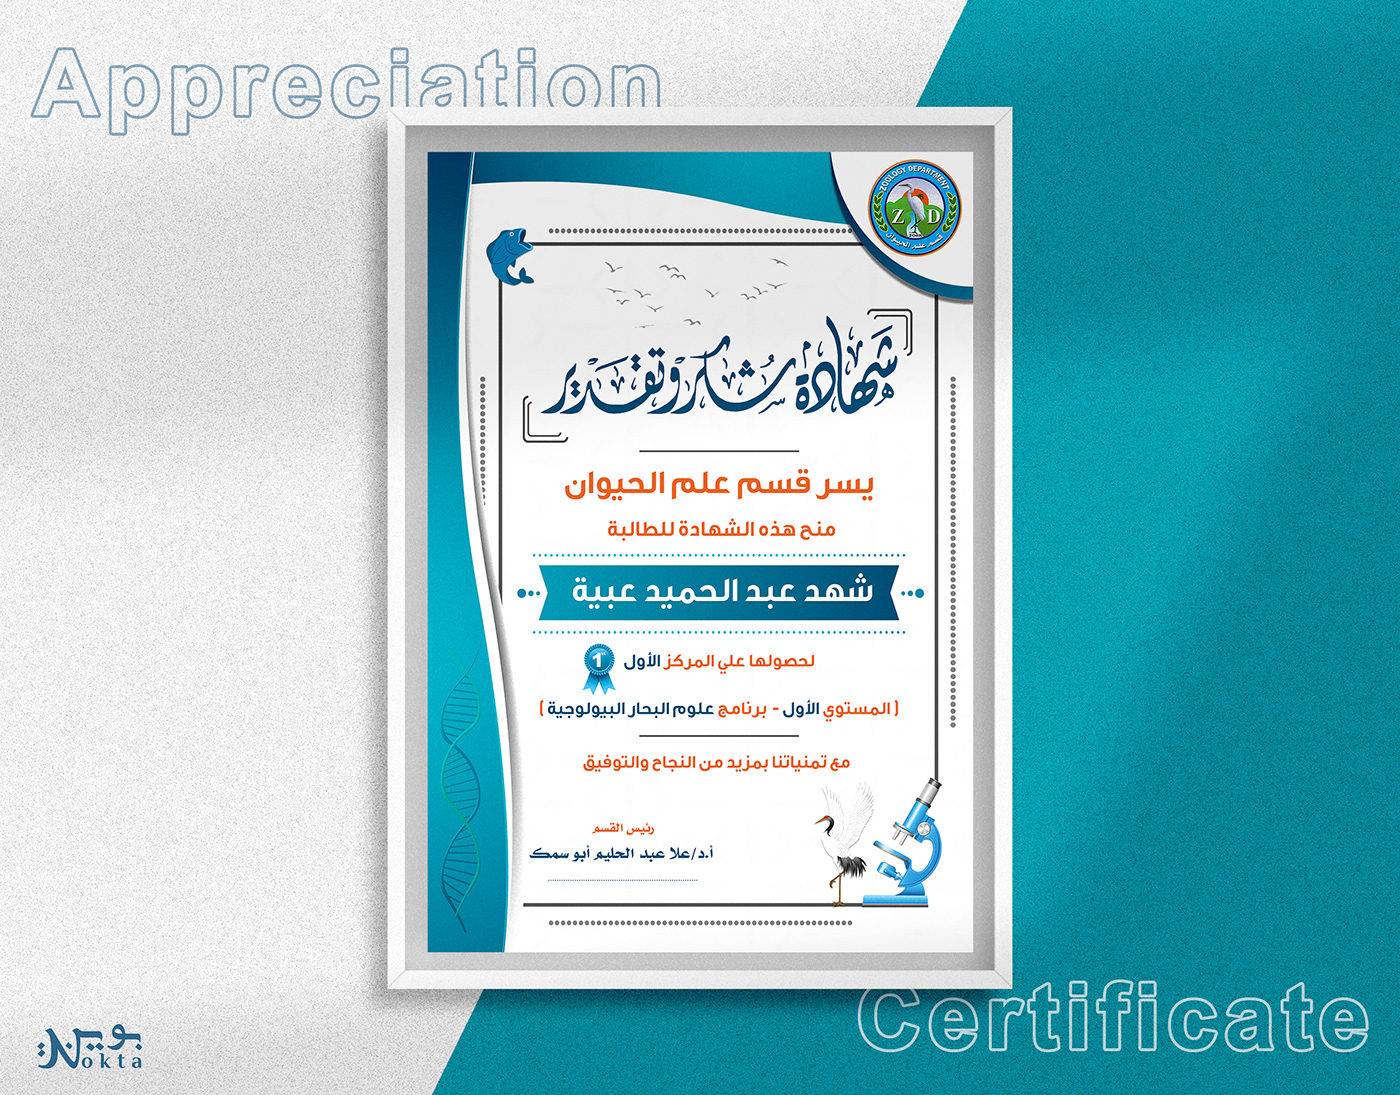 animal science department Appreciation certficate certificate design certificate template Certificates certification diploma شهادة تقدير شهادة تقديرية